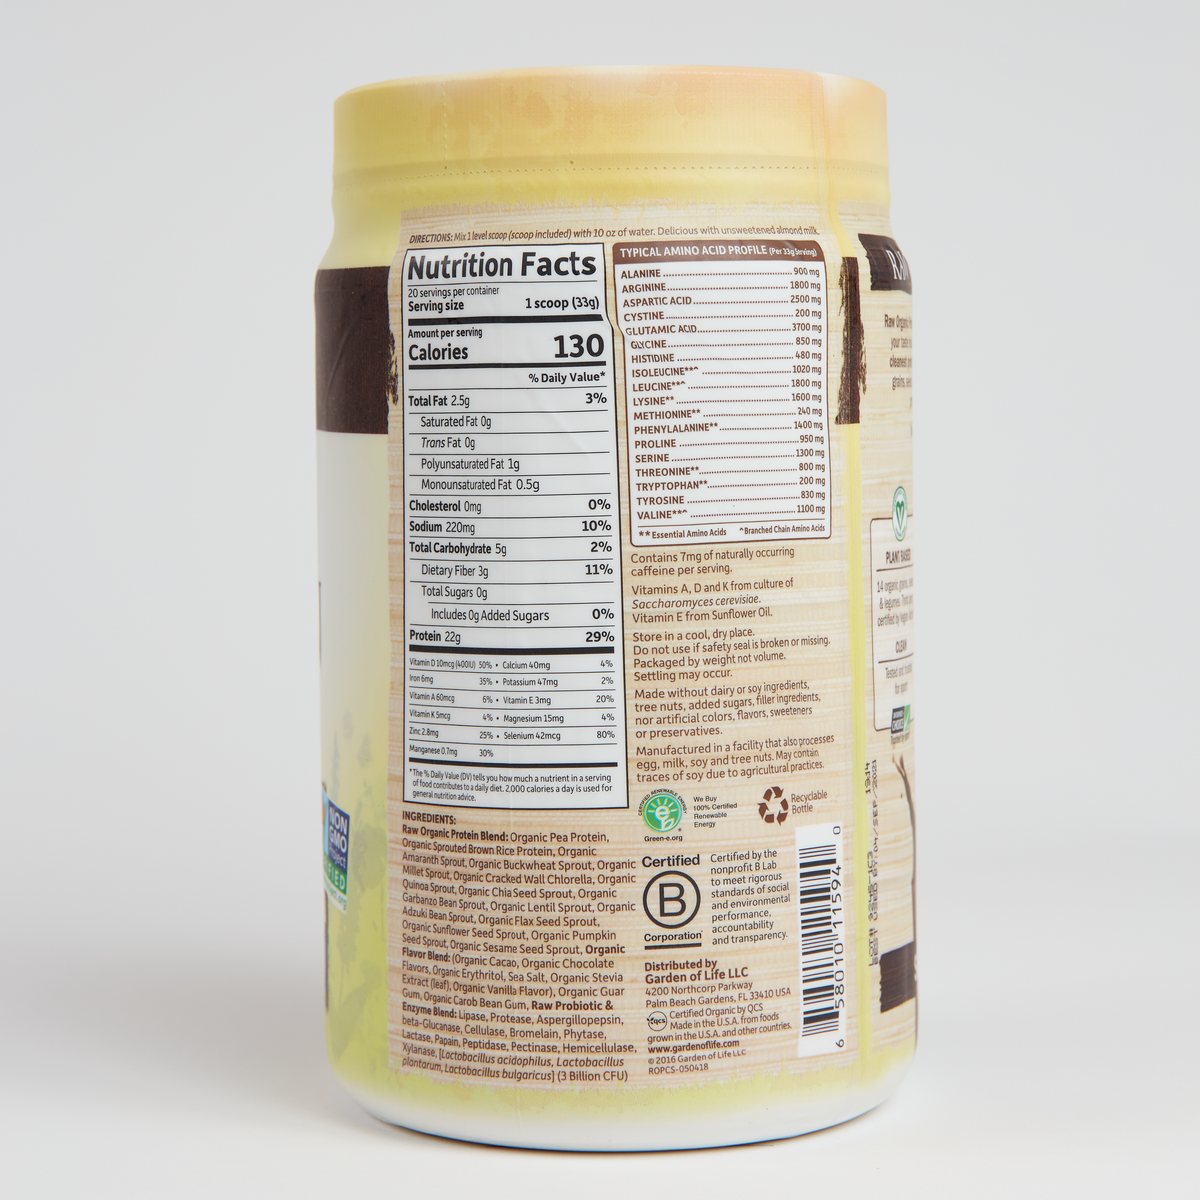 Garden Of Life RAW Organic Protein - Chocolate - 660 g